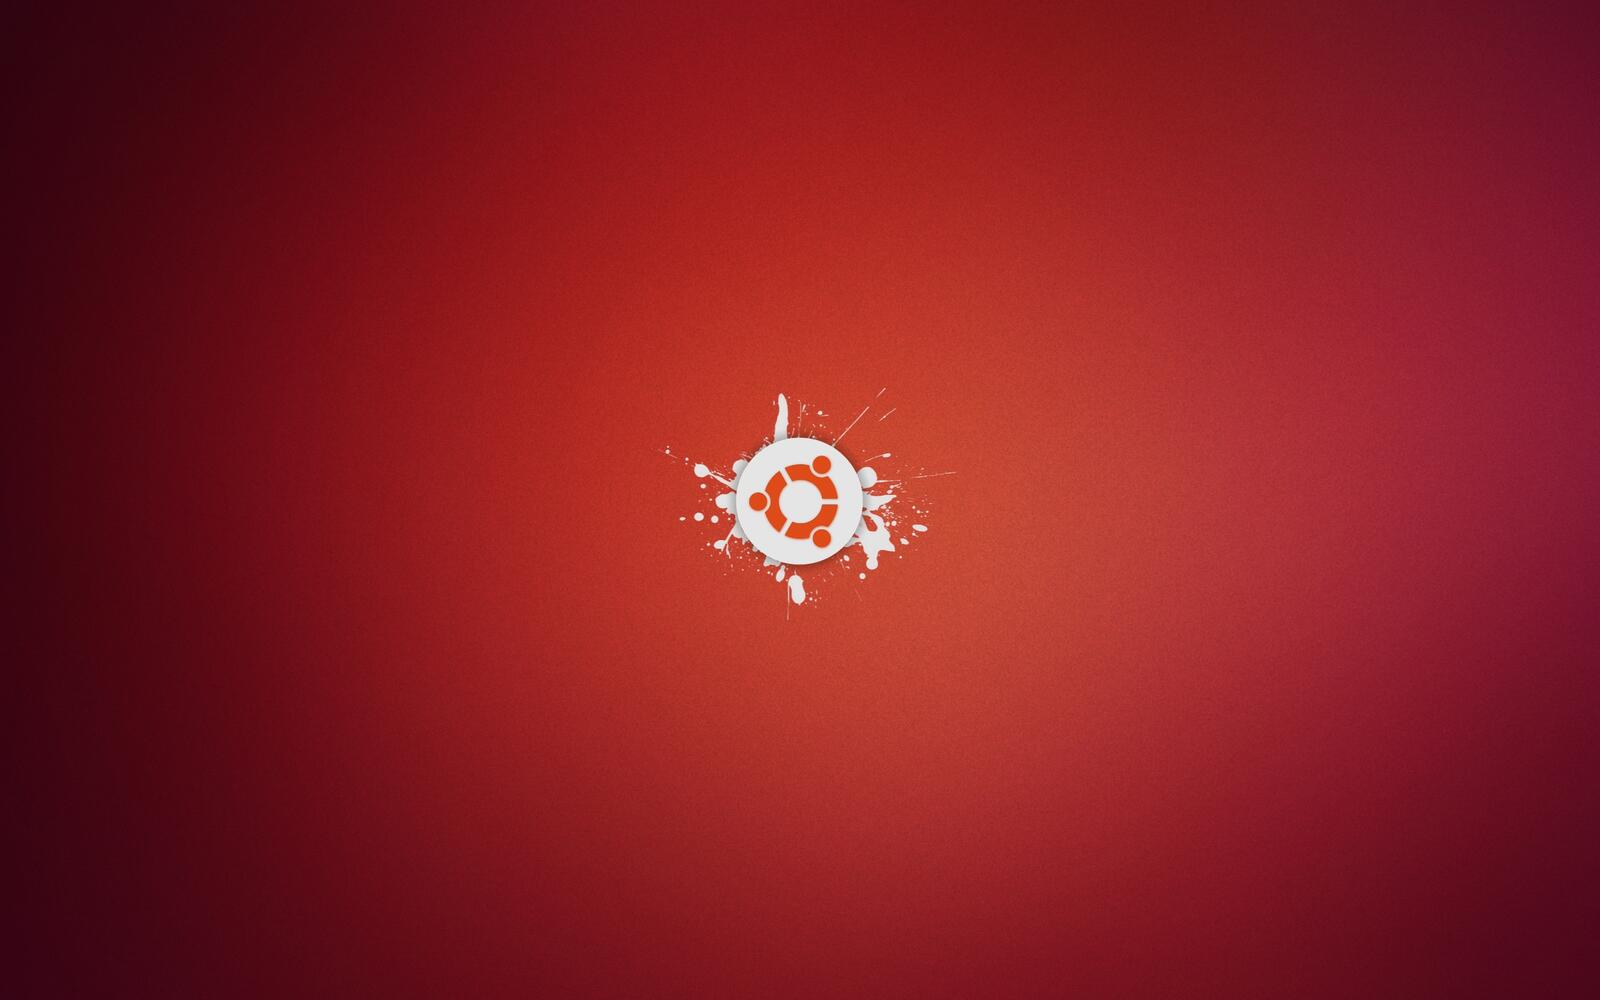 Бесплатное фото Логотип Ubuntu на красном фоне